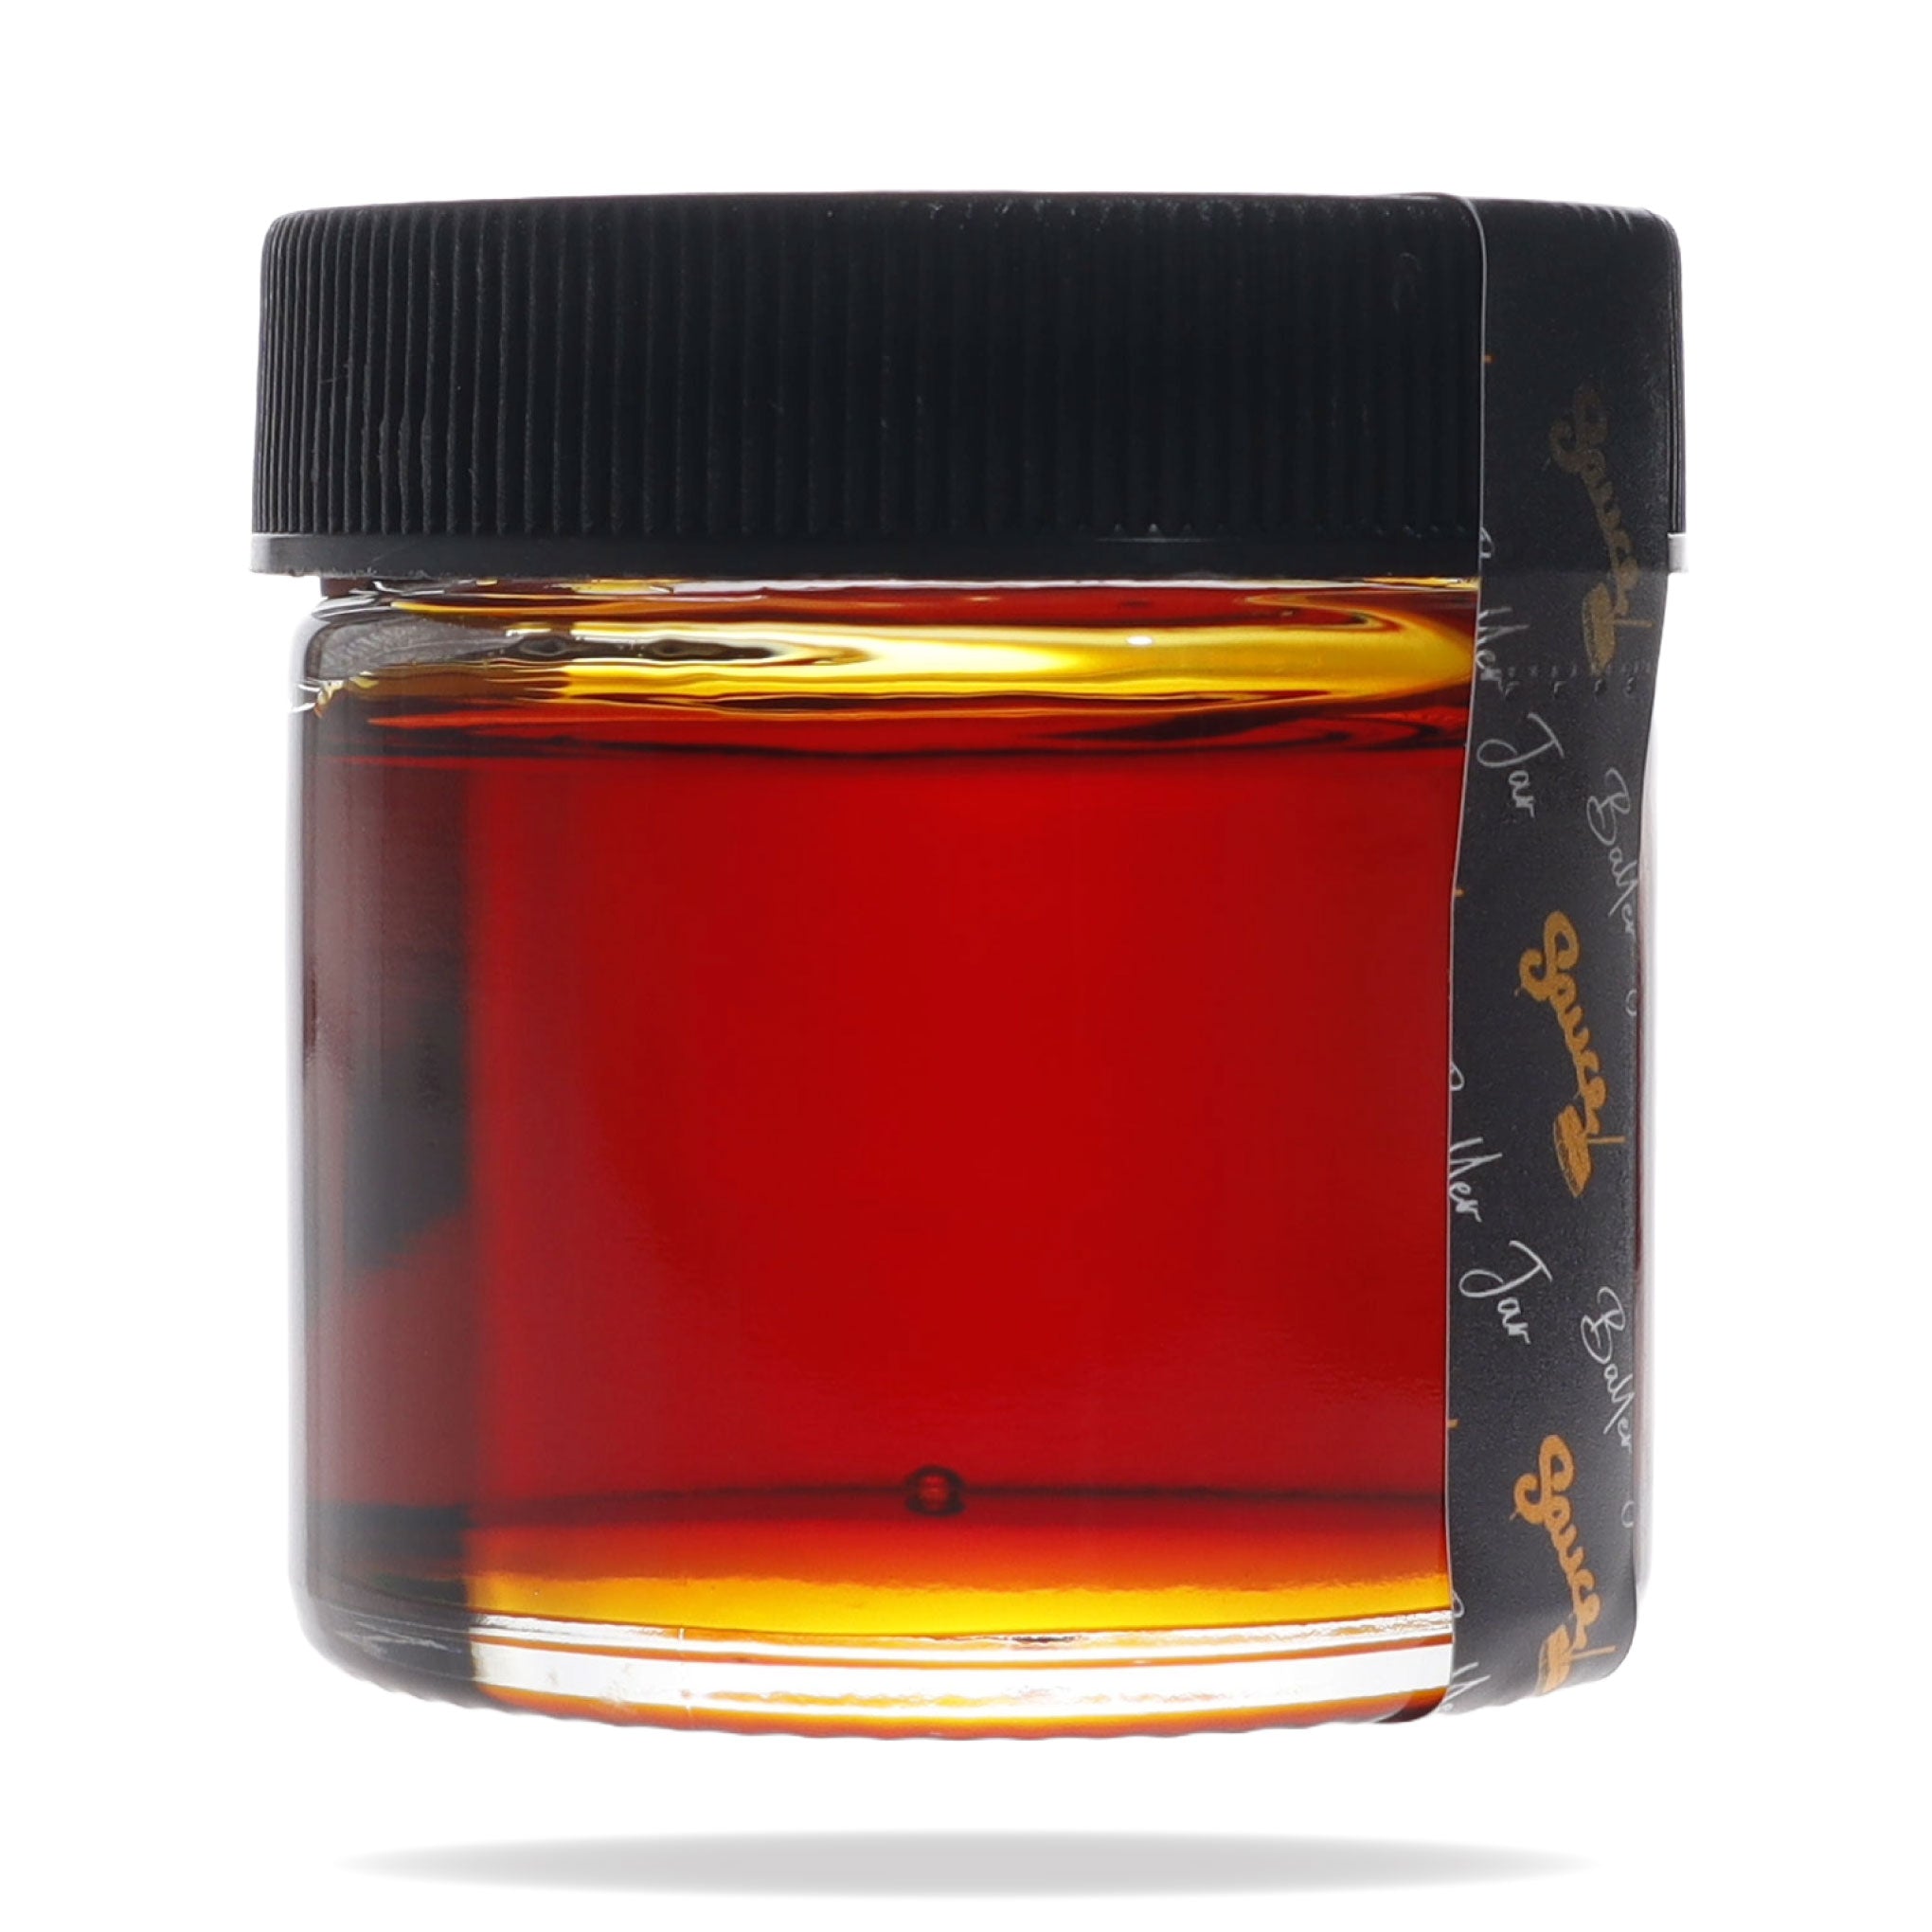 Image of Broad Spectrum CBD Distillate 28 gram baller jar.